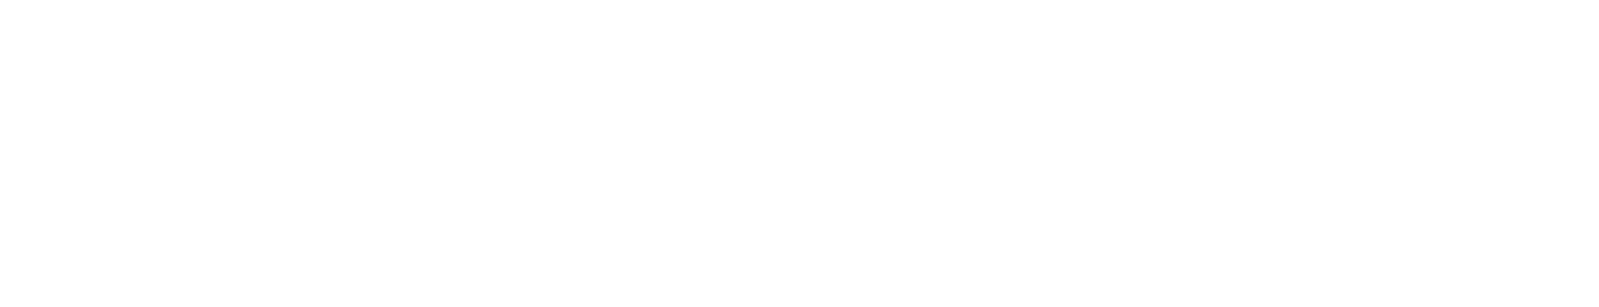 Truecaller logo grand pour les fonds sombres (PNG transparent)